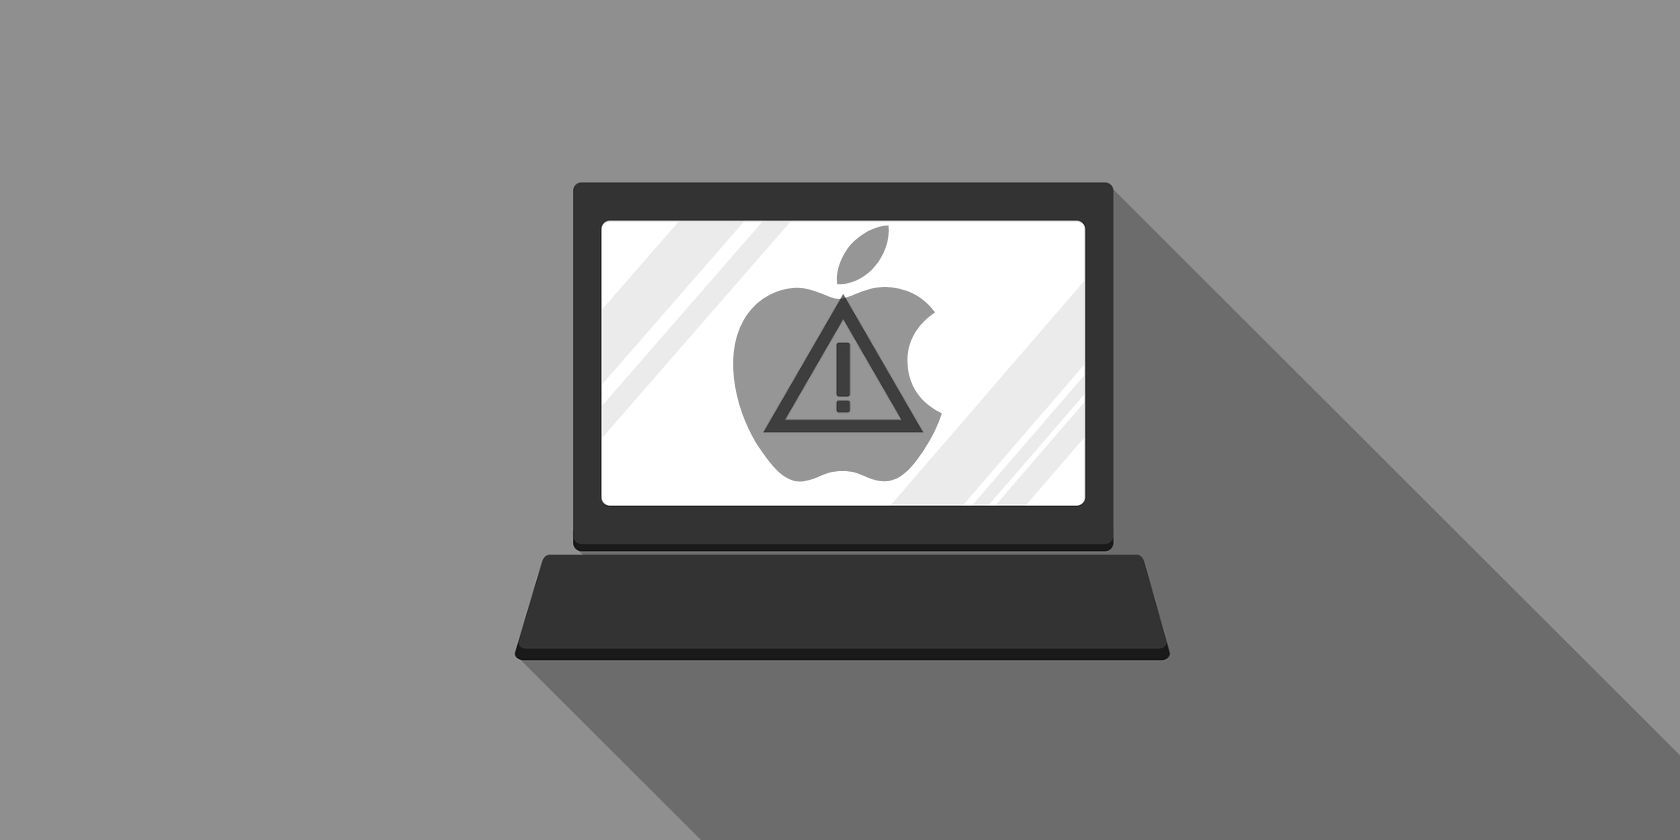 apple and alert symbols on laptop screen